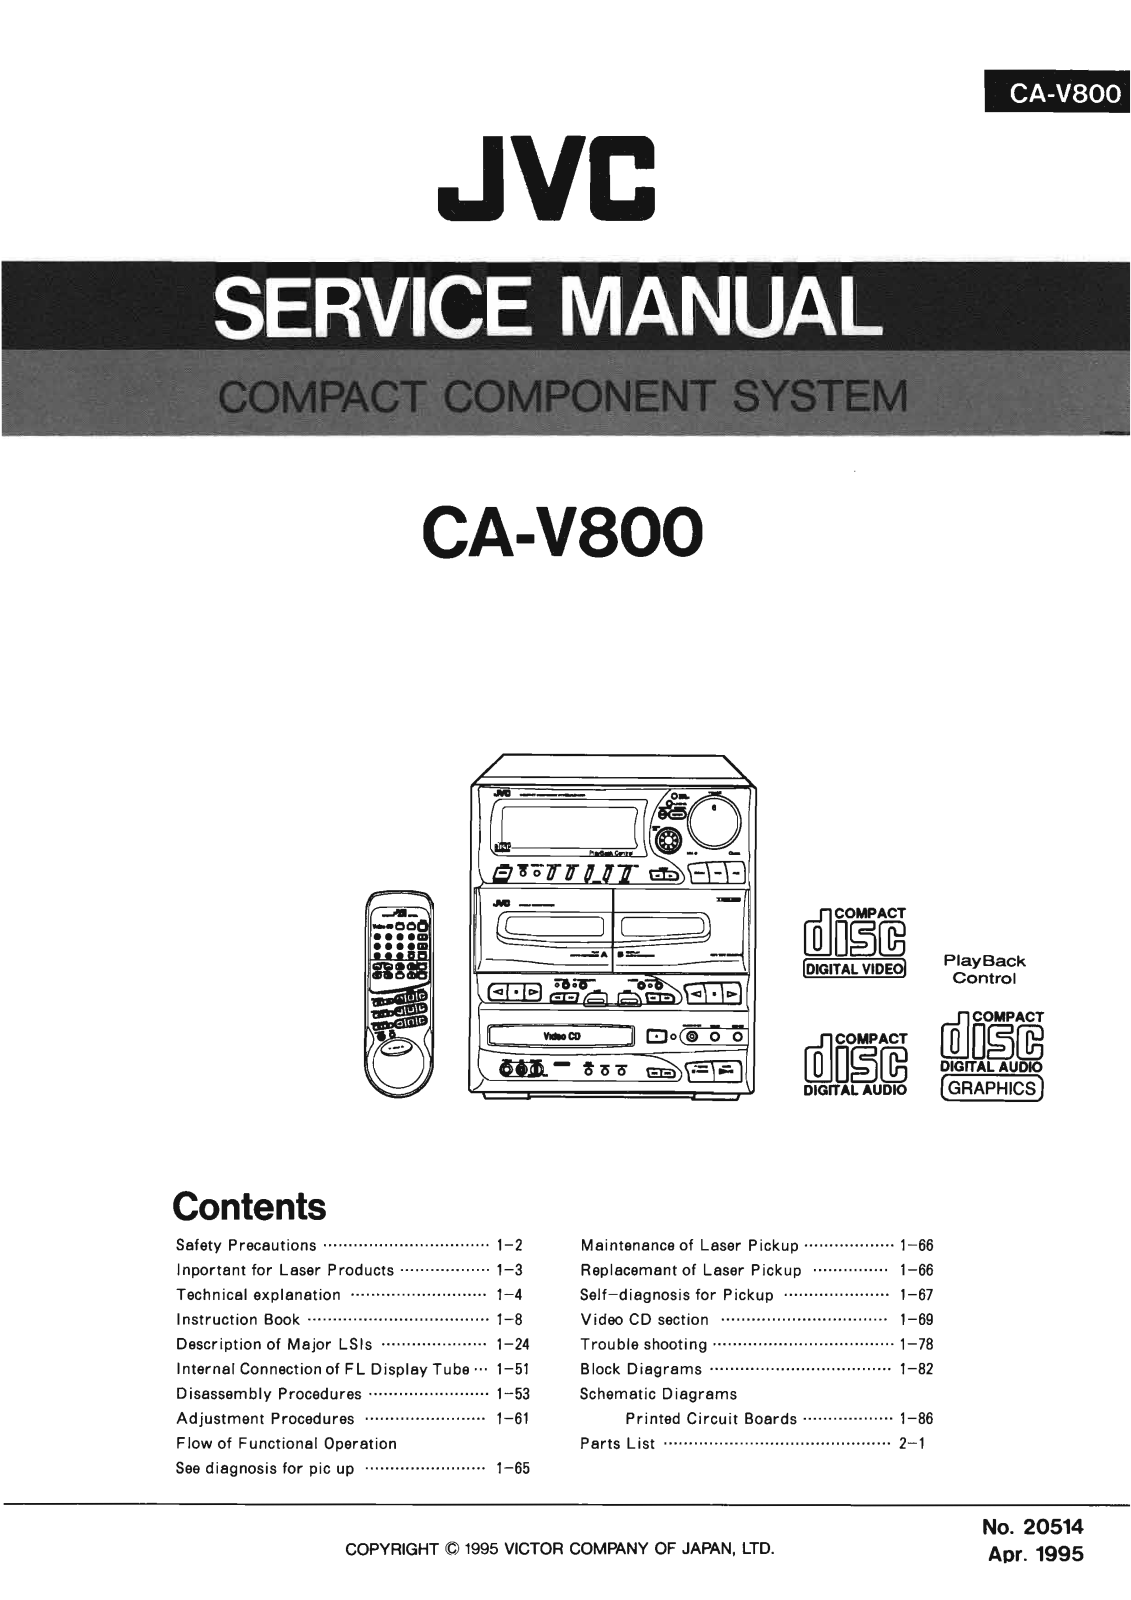 Jvc CA-V800 Service Manual